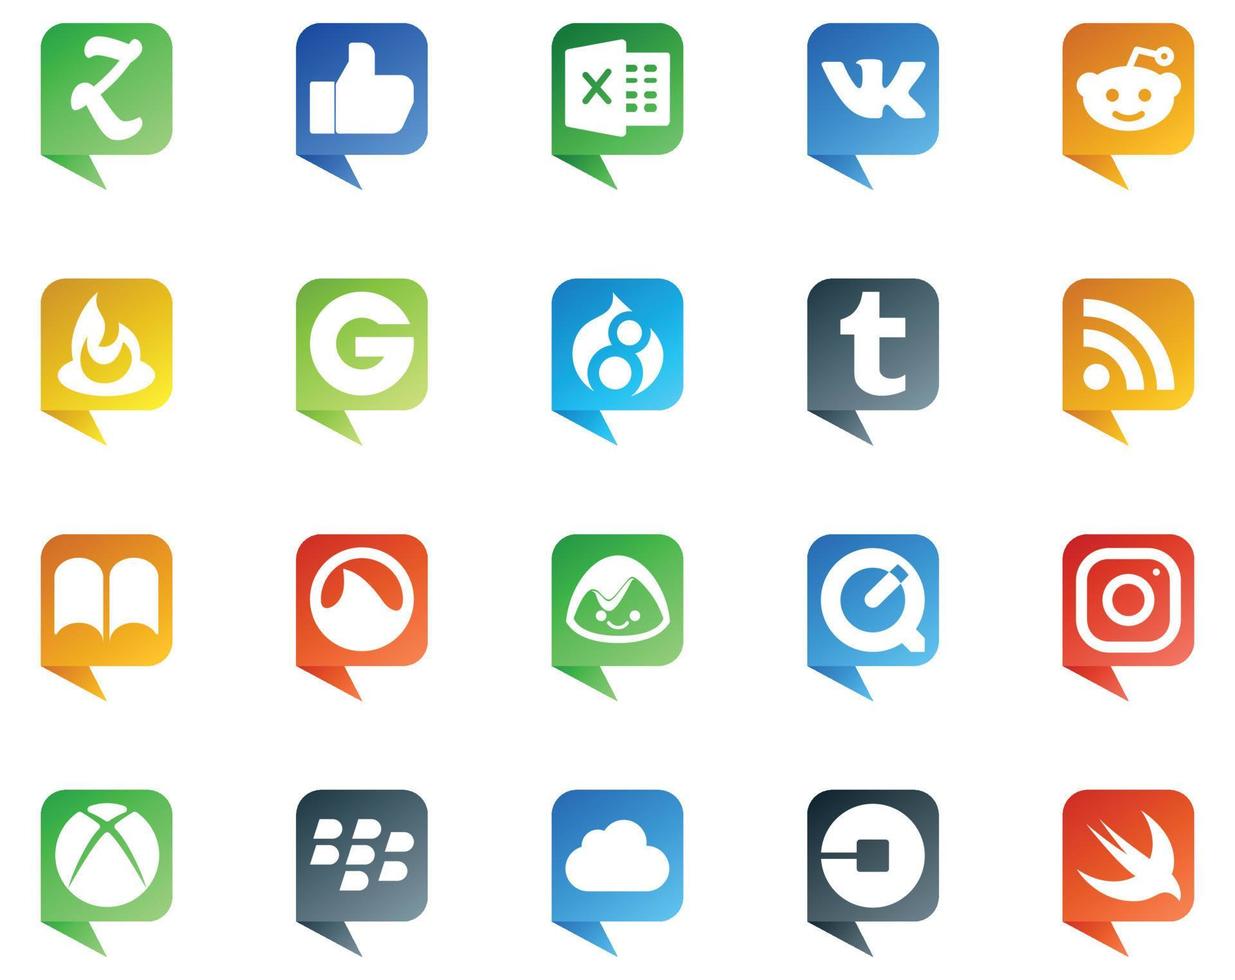 20 sociale media discorso bolla stile logo piace icloud xbox Tumblr instagram campo base vettore